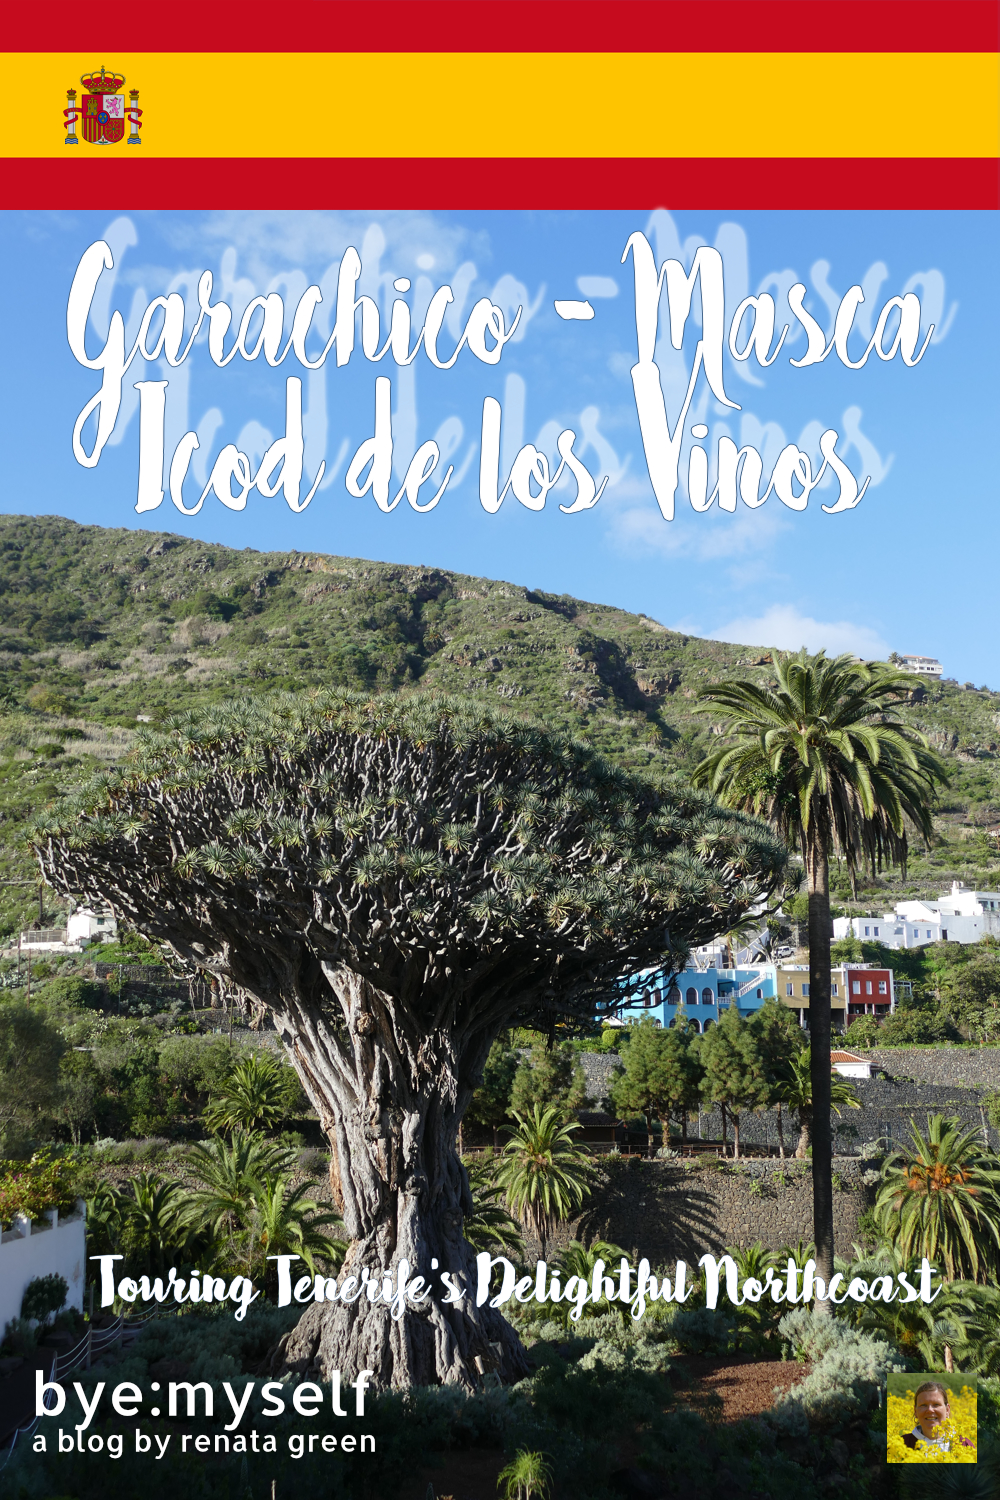 Pinnable Picture on the Post GARACHICO - ICOD DE LOS VINOS - MASCA - Touring Tenerife's Delightful Northcoast